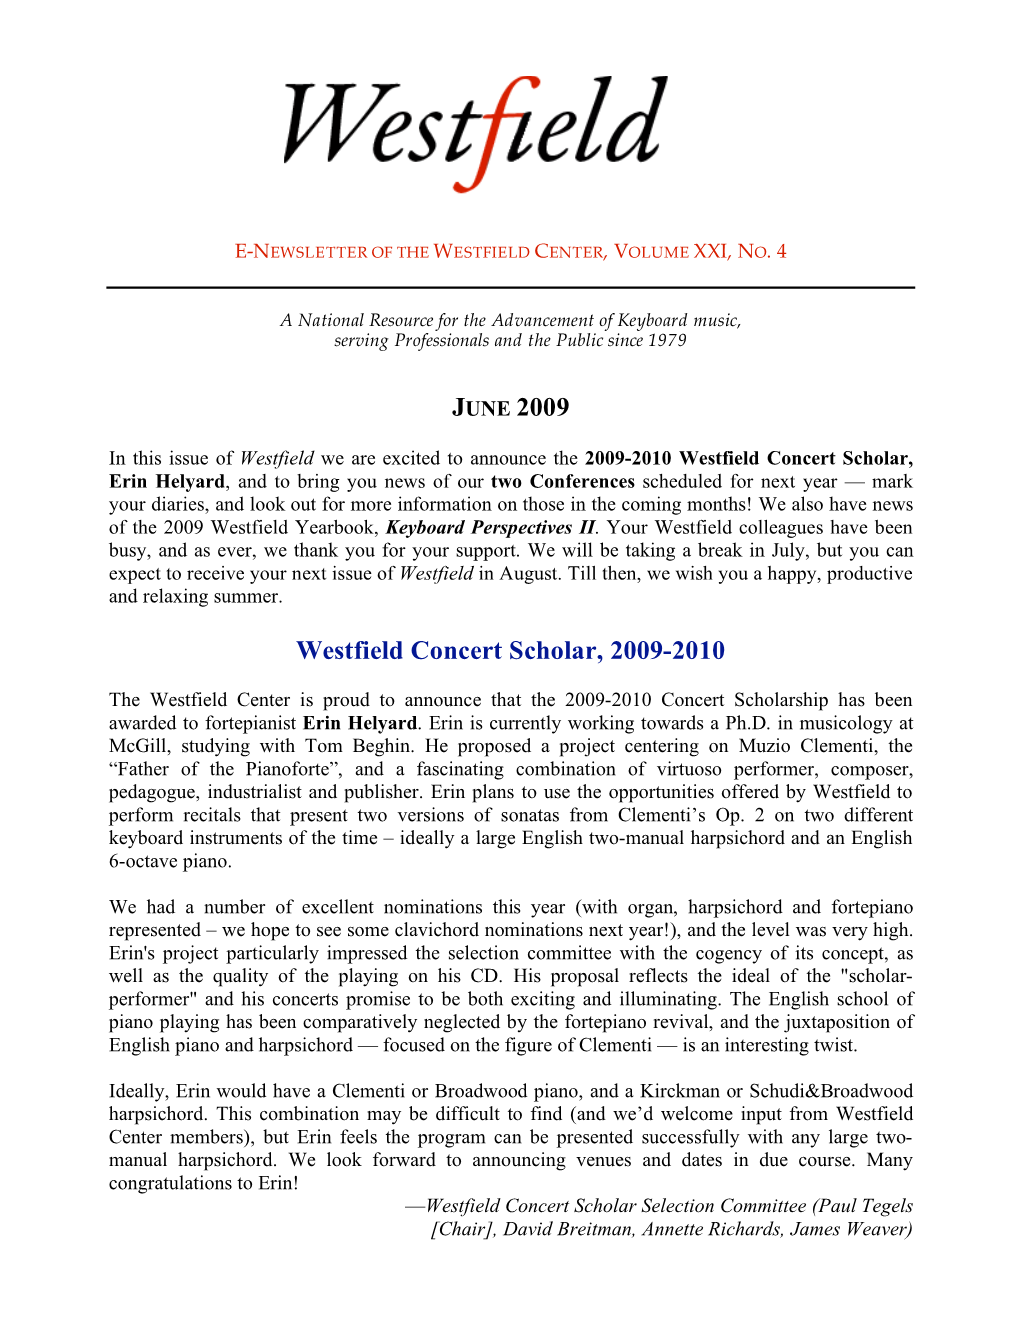 Westfield Newsletter, Vol. XXI, No. 4, June 2009